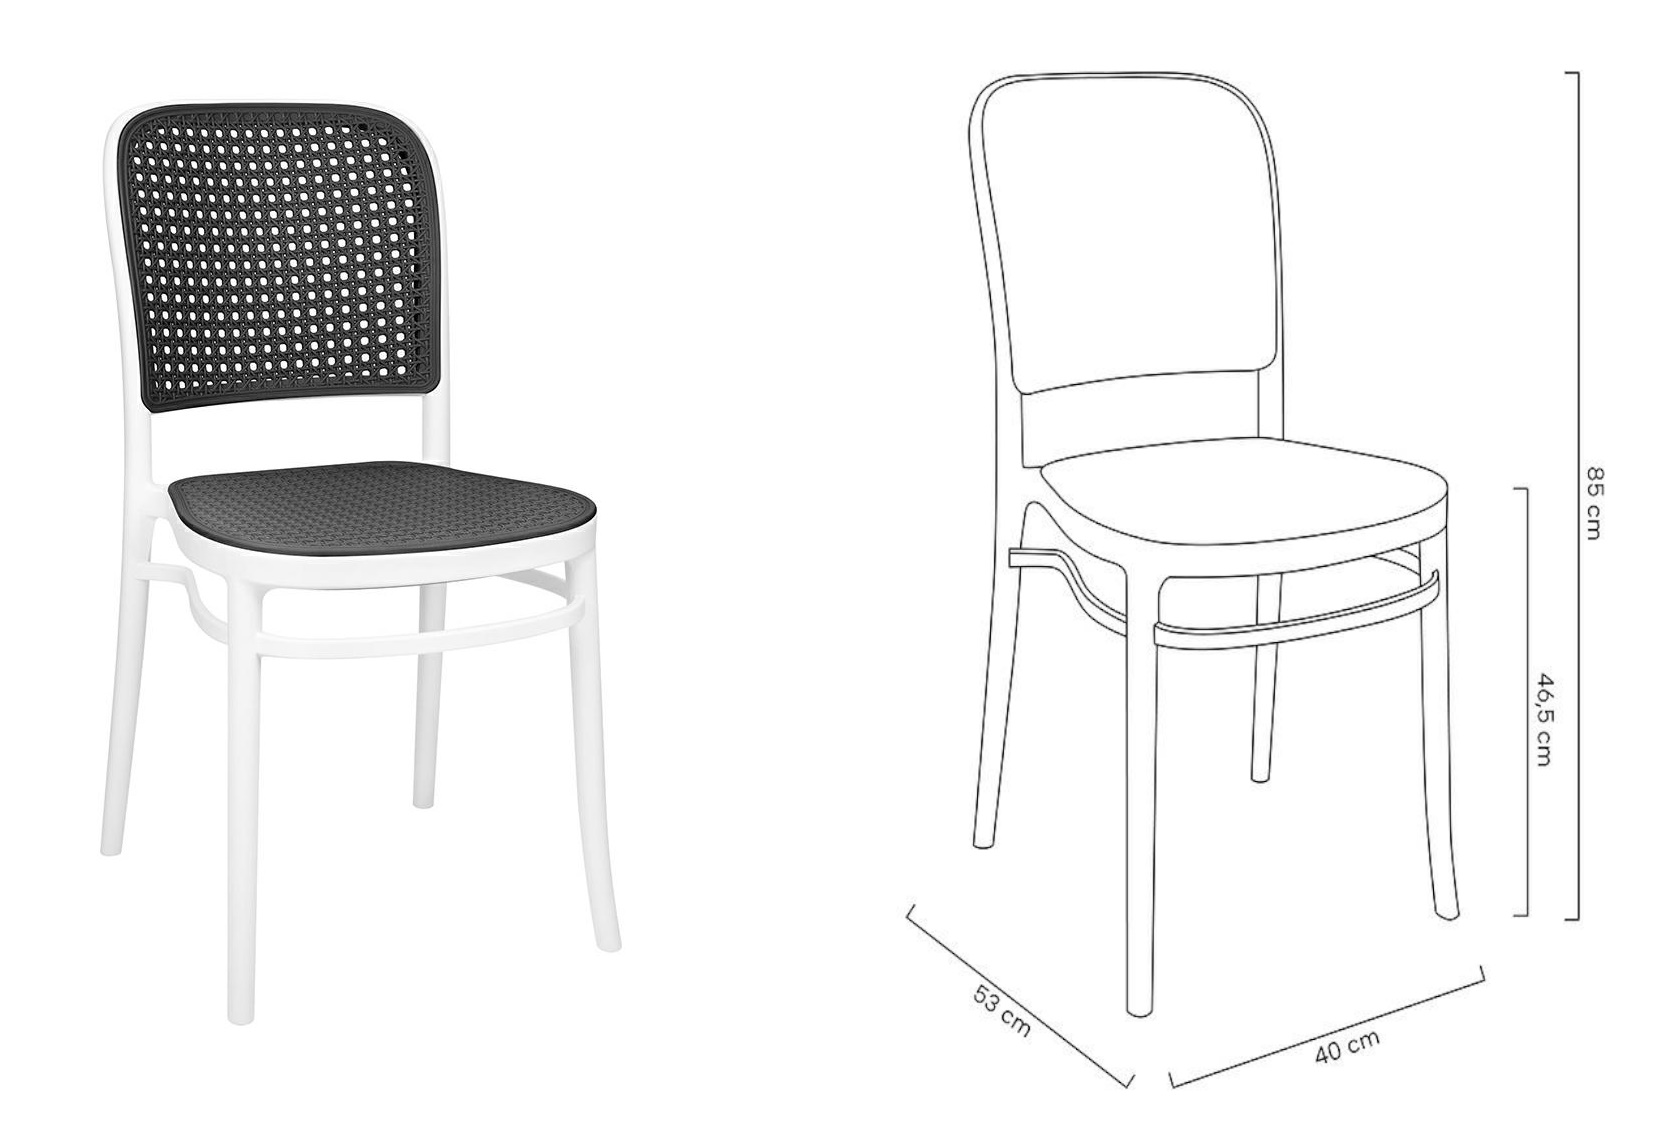 krzesła monstera modesto design, wymiary